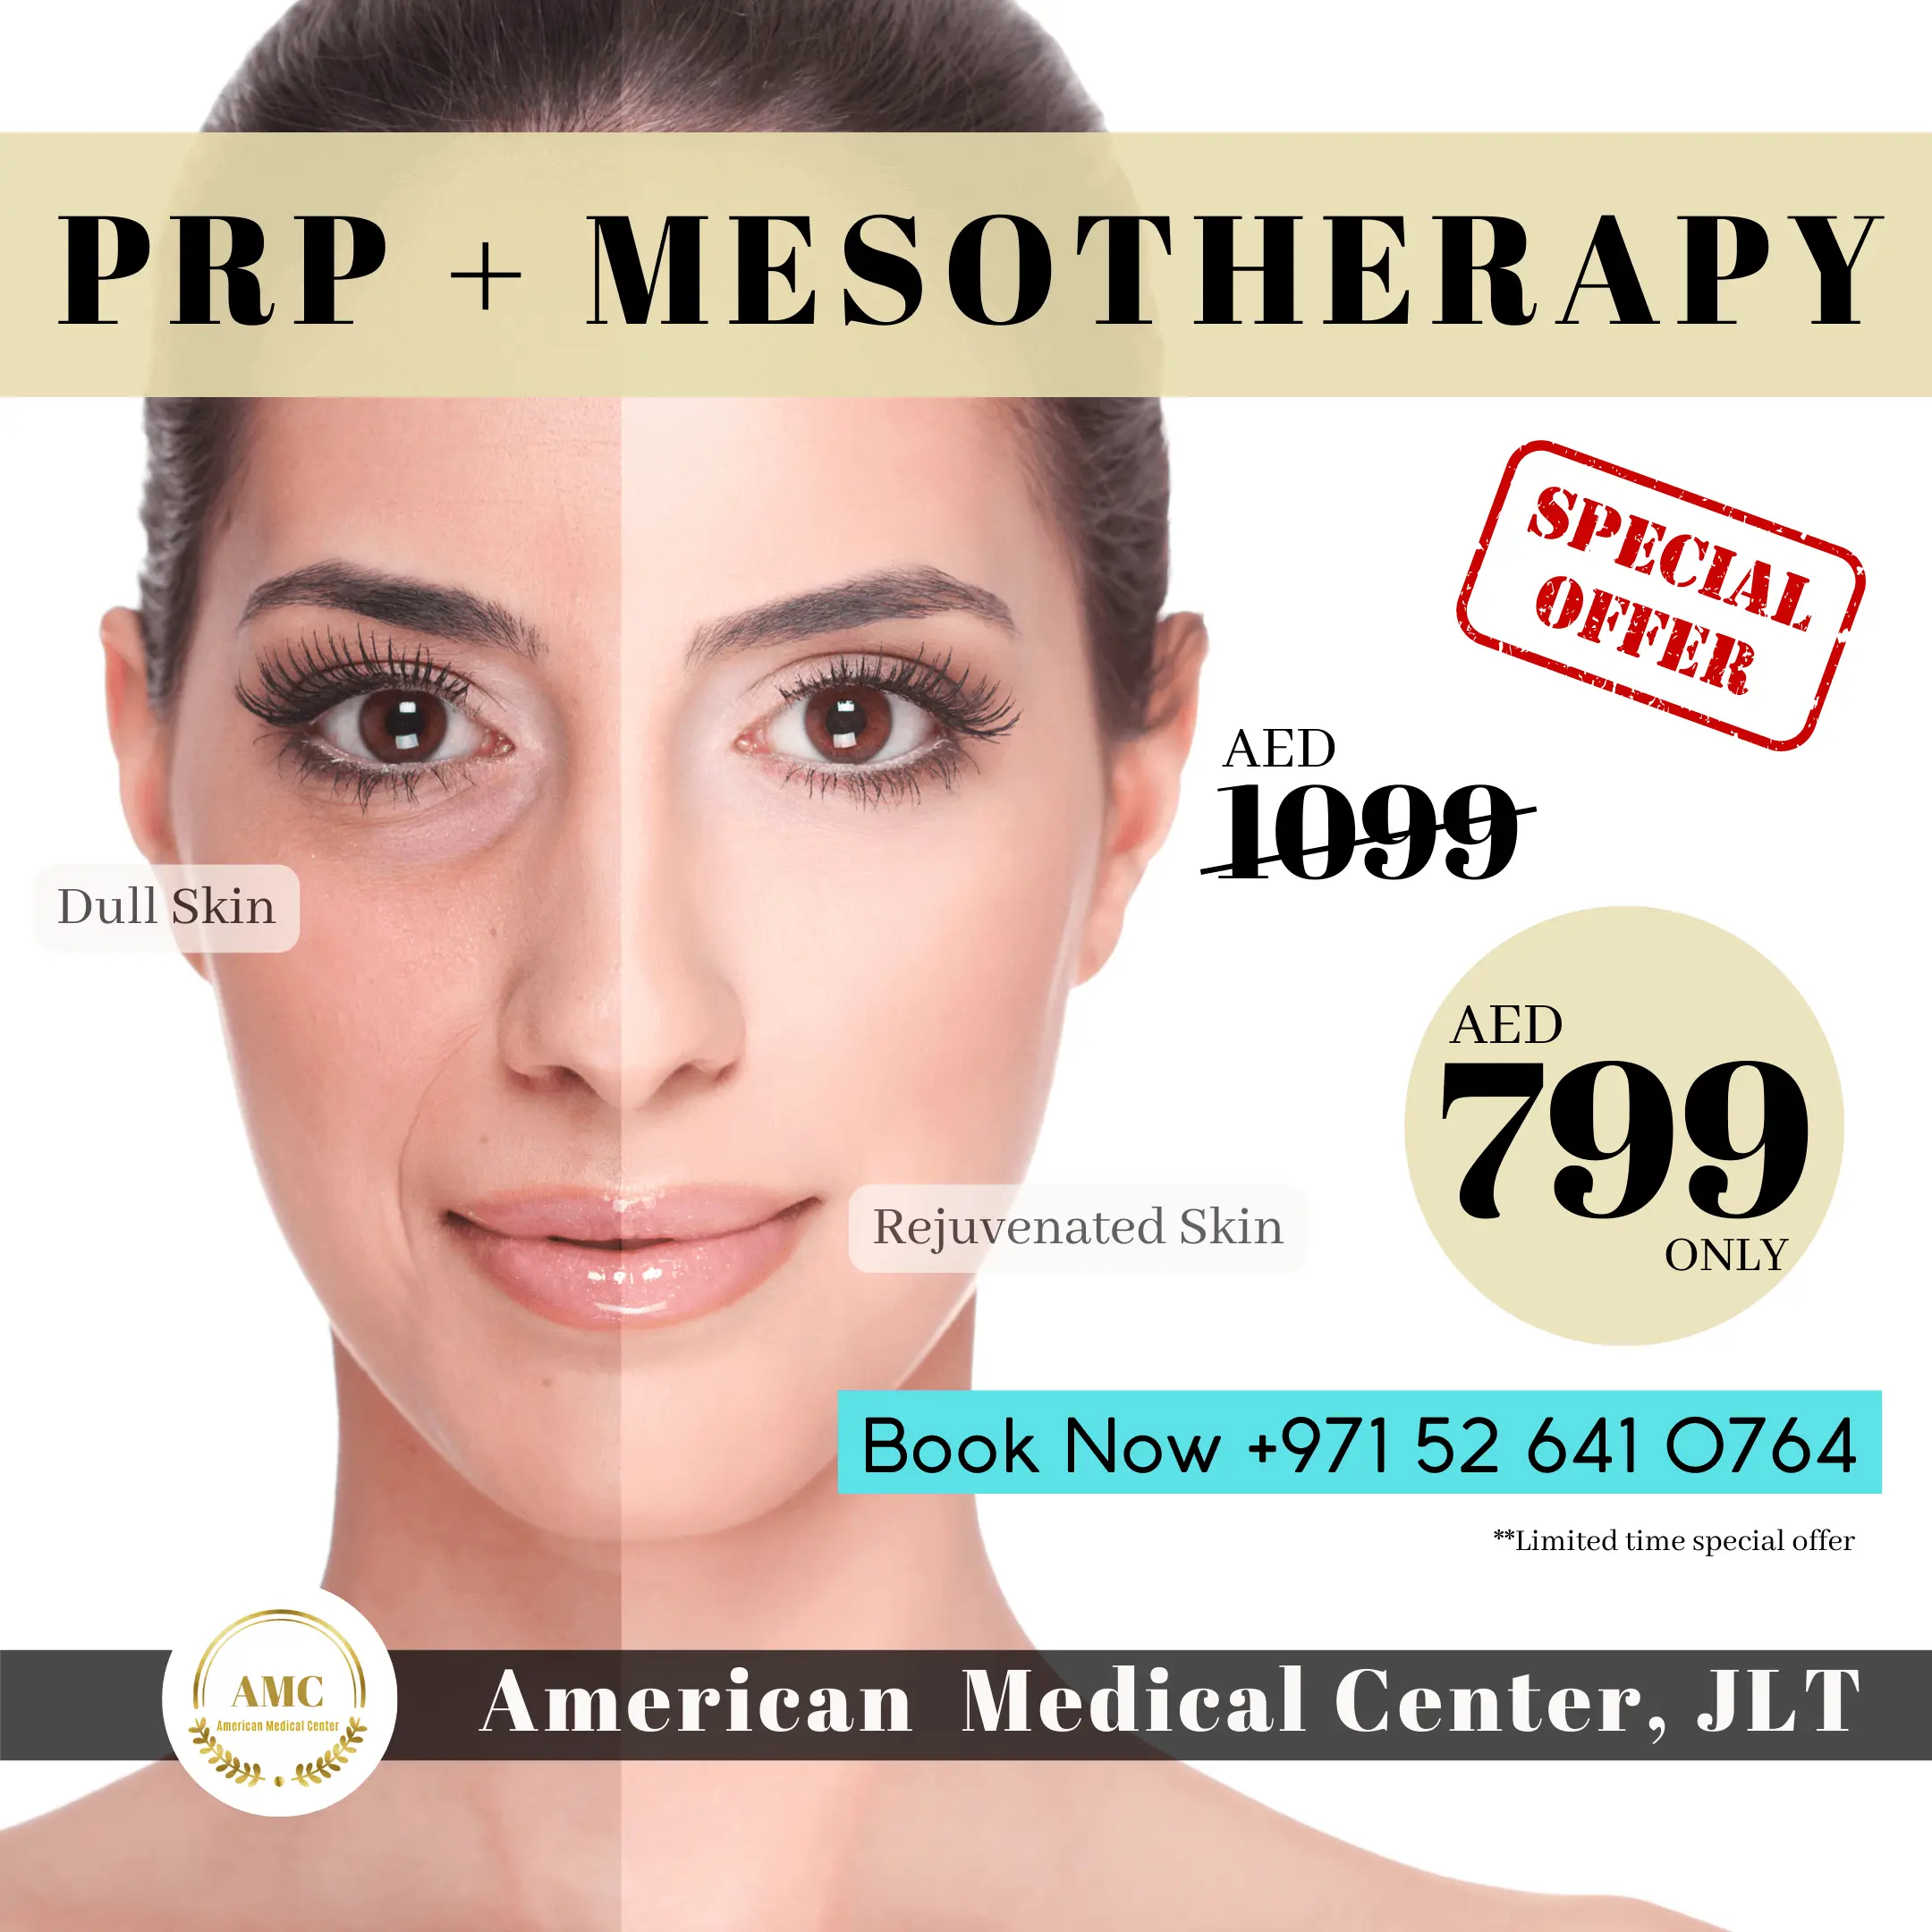 PRP in dubai, Mesotherapy in dubai, American Medical Center JLT.